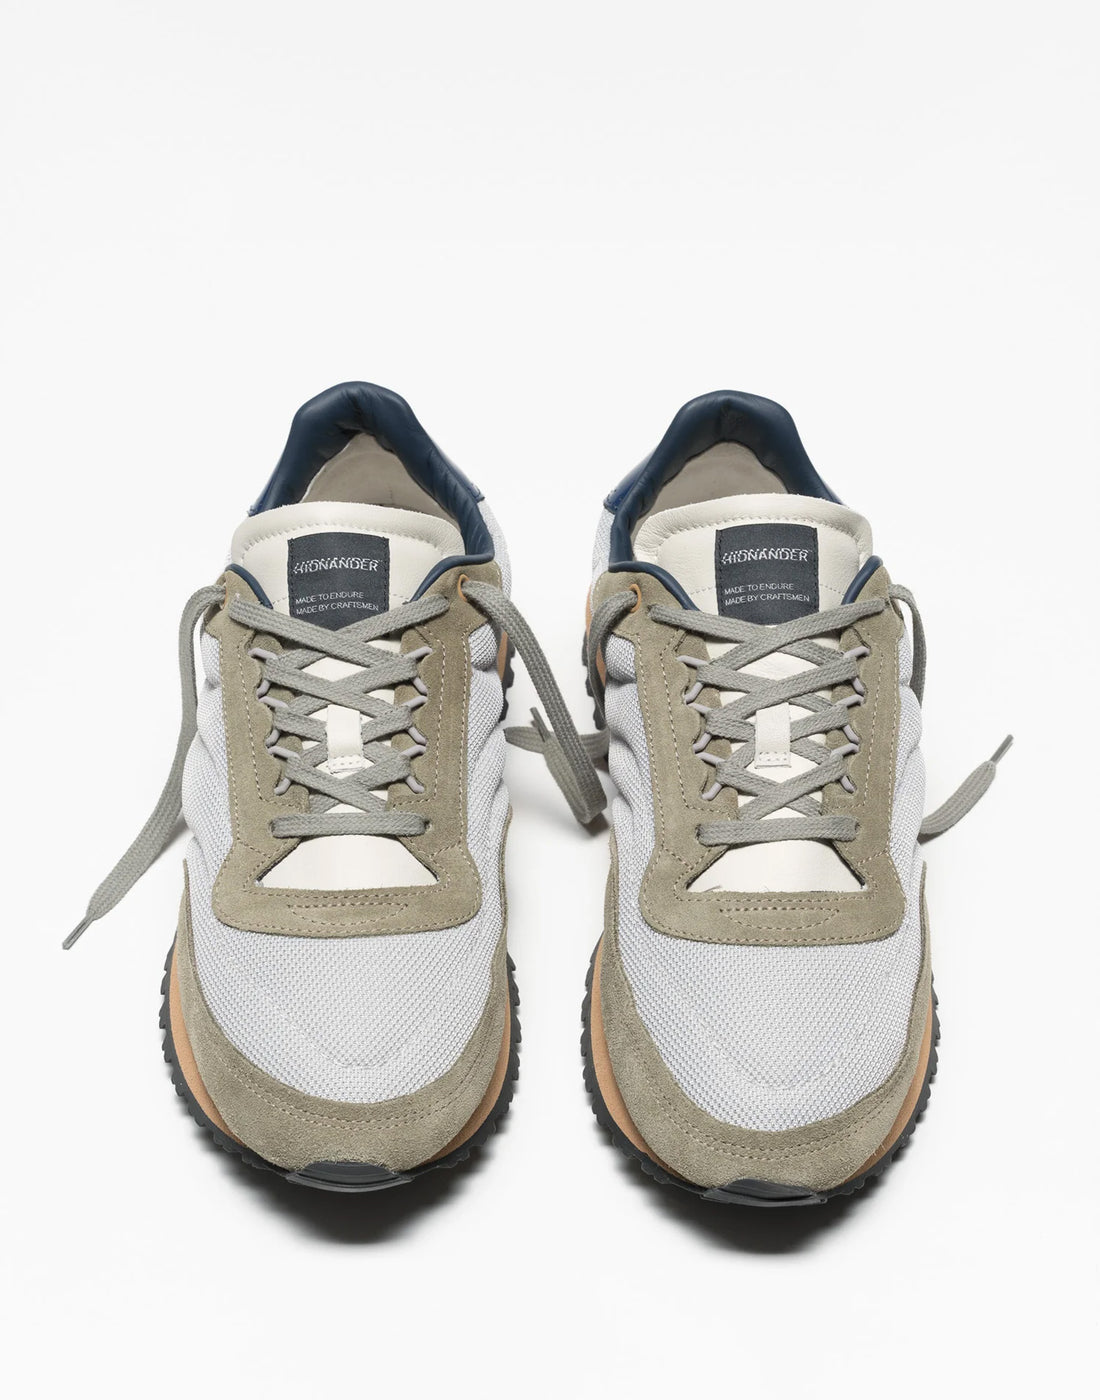 HIDNANDER Sneakers Tenkei Silver Net/Navy Blue